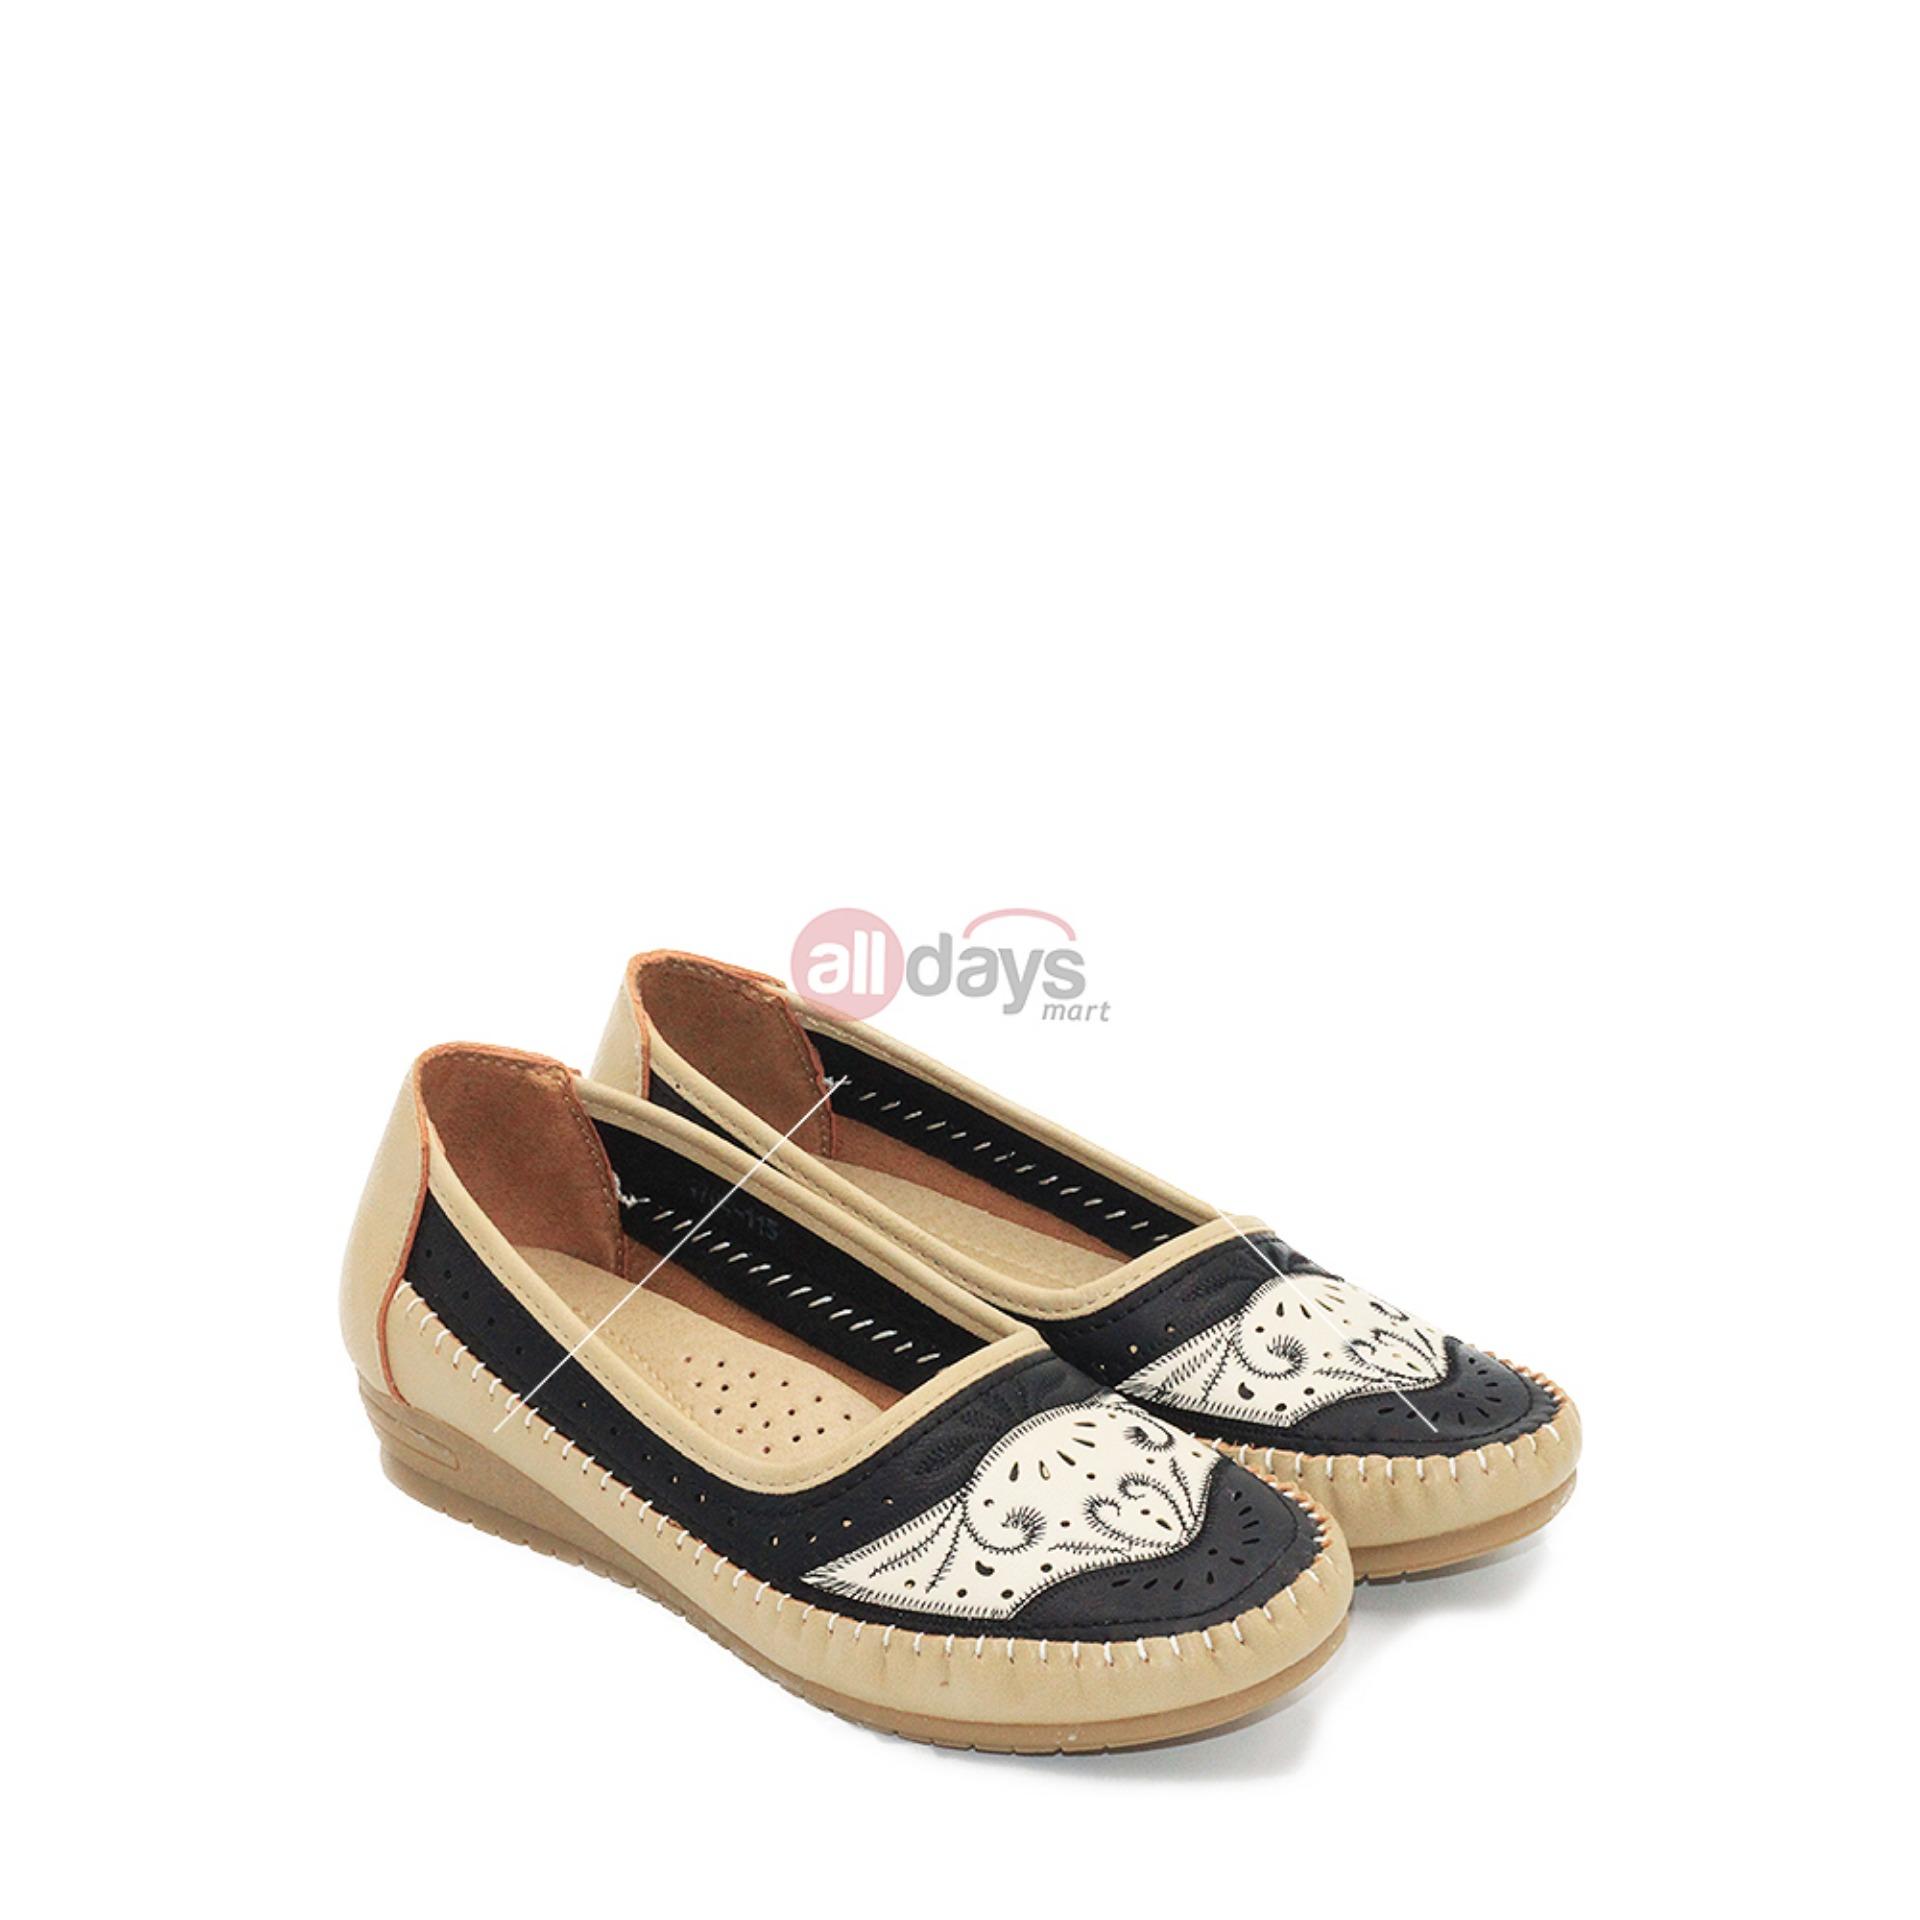 Dea Sepatu Flat Trepes  Selop Lady Flat Shoes  1611 06 